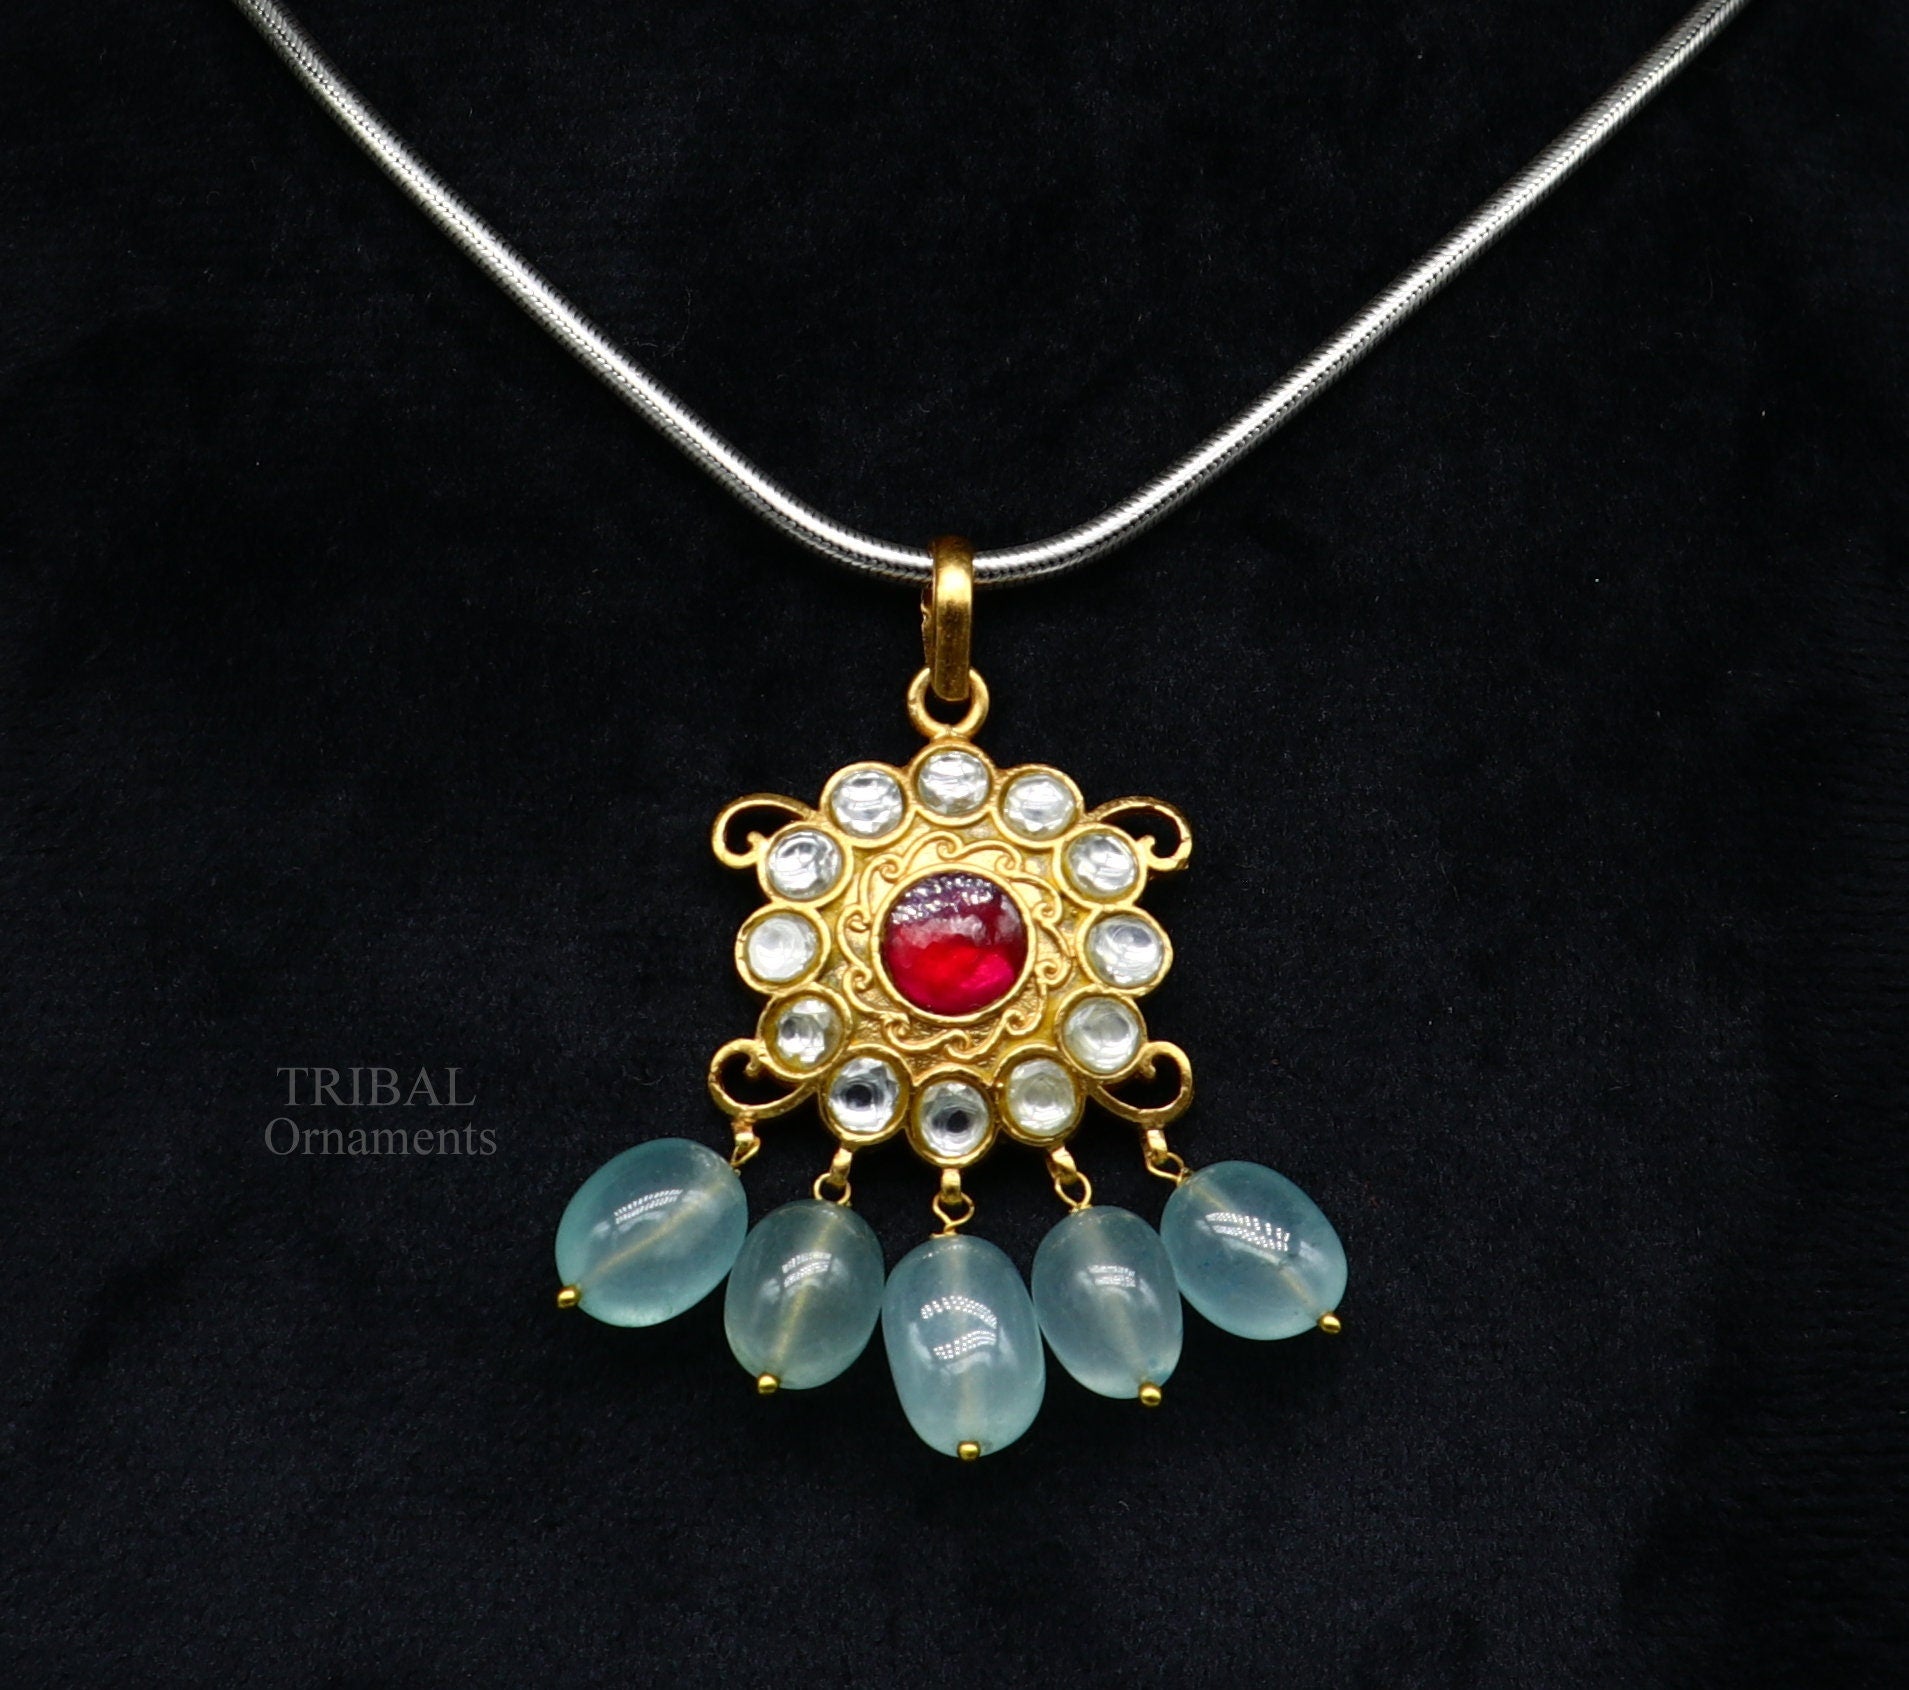 Handmade kundan work 925 sterling silver floral design pendant with gorgeous hanging aqua quartz stone, best gifting wedding jewelry ssp1506 - TRIBAL ORNAMENTS